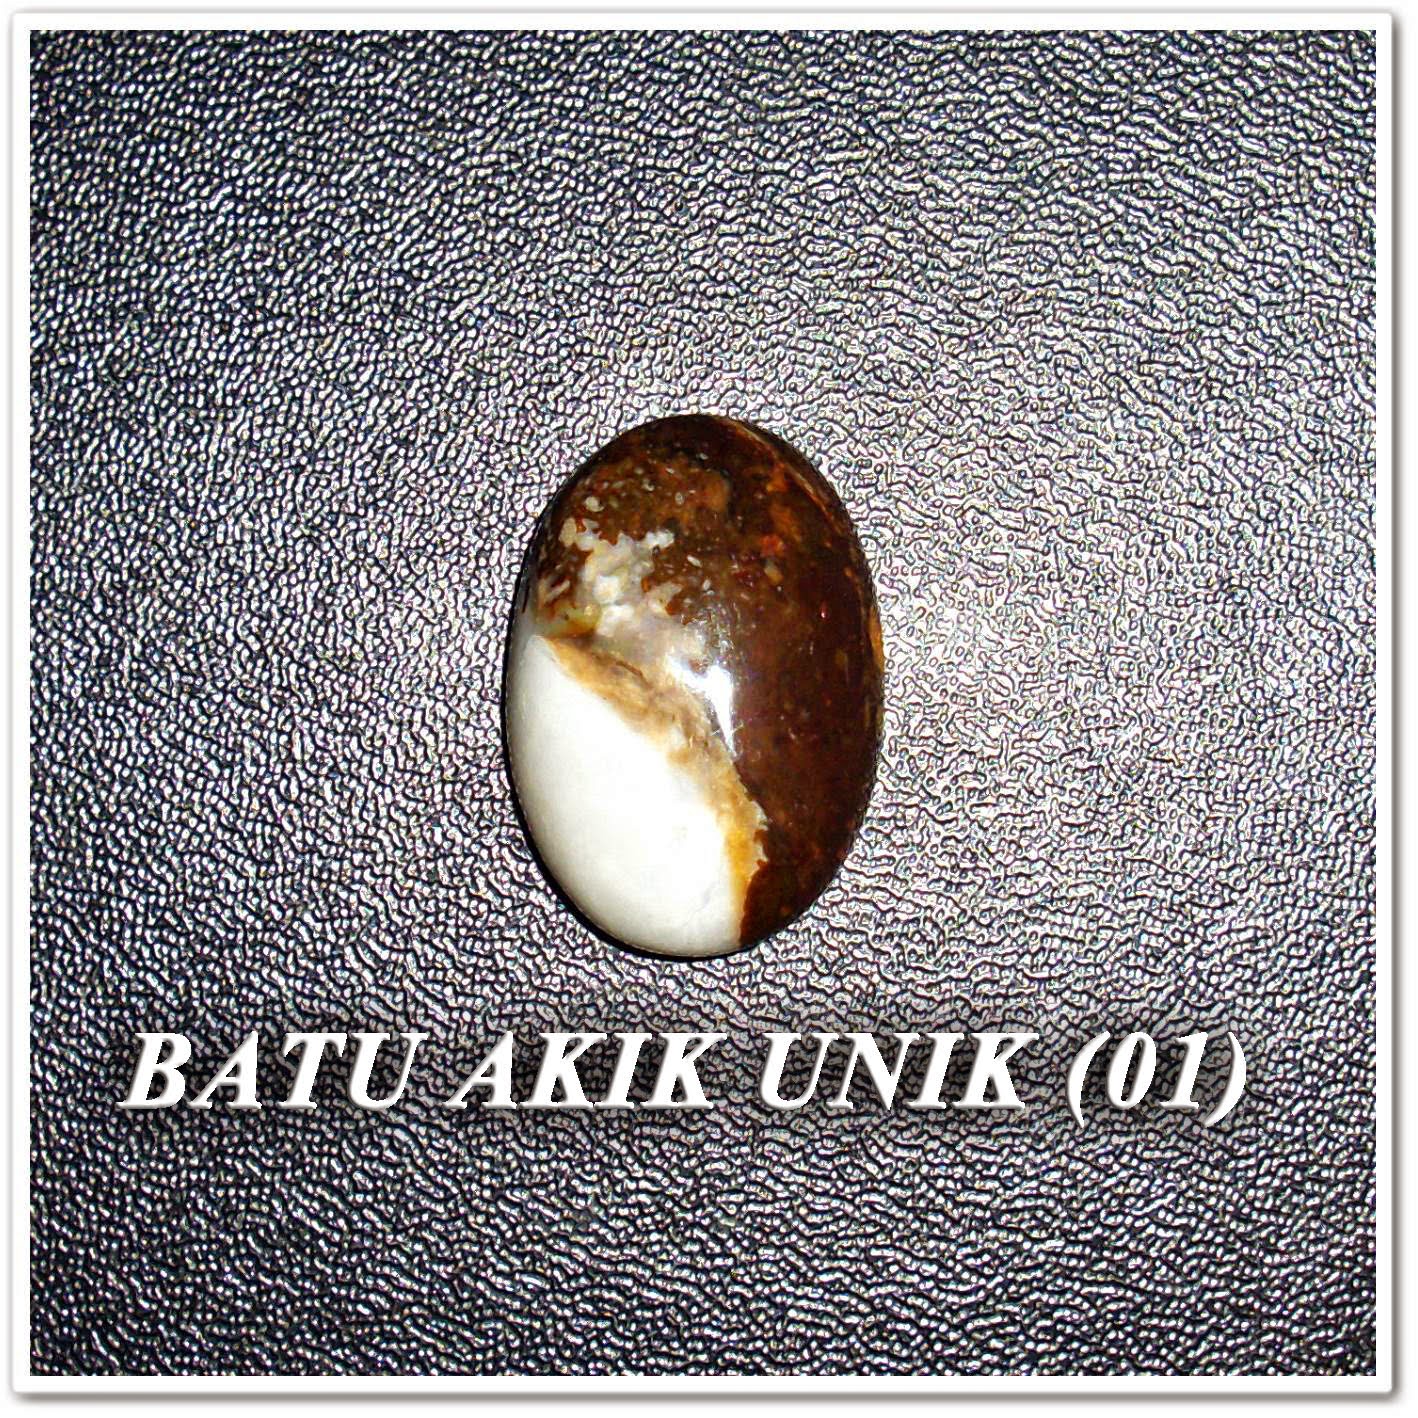 http://batuakik84.blogspot.com/2014/10/batu-akik-unik-01.html